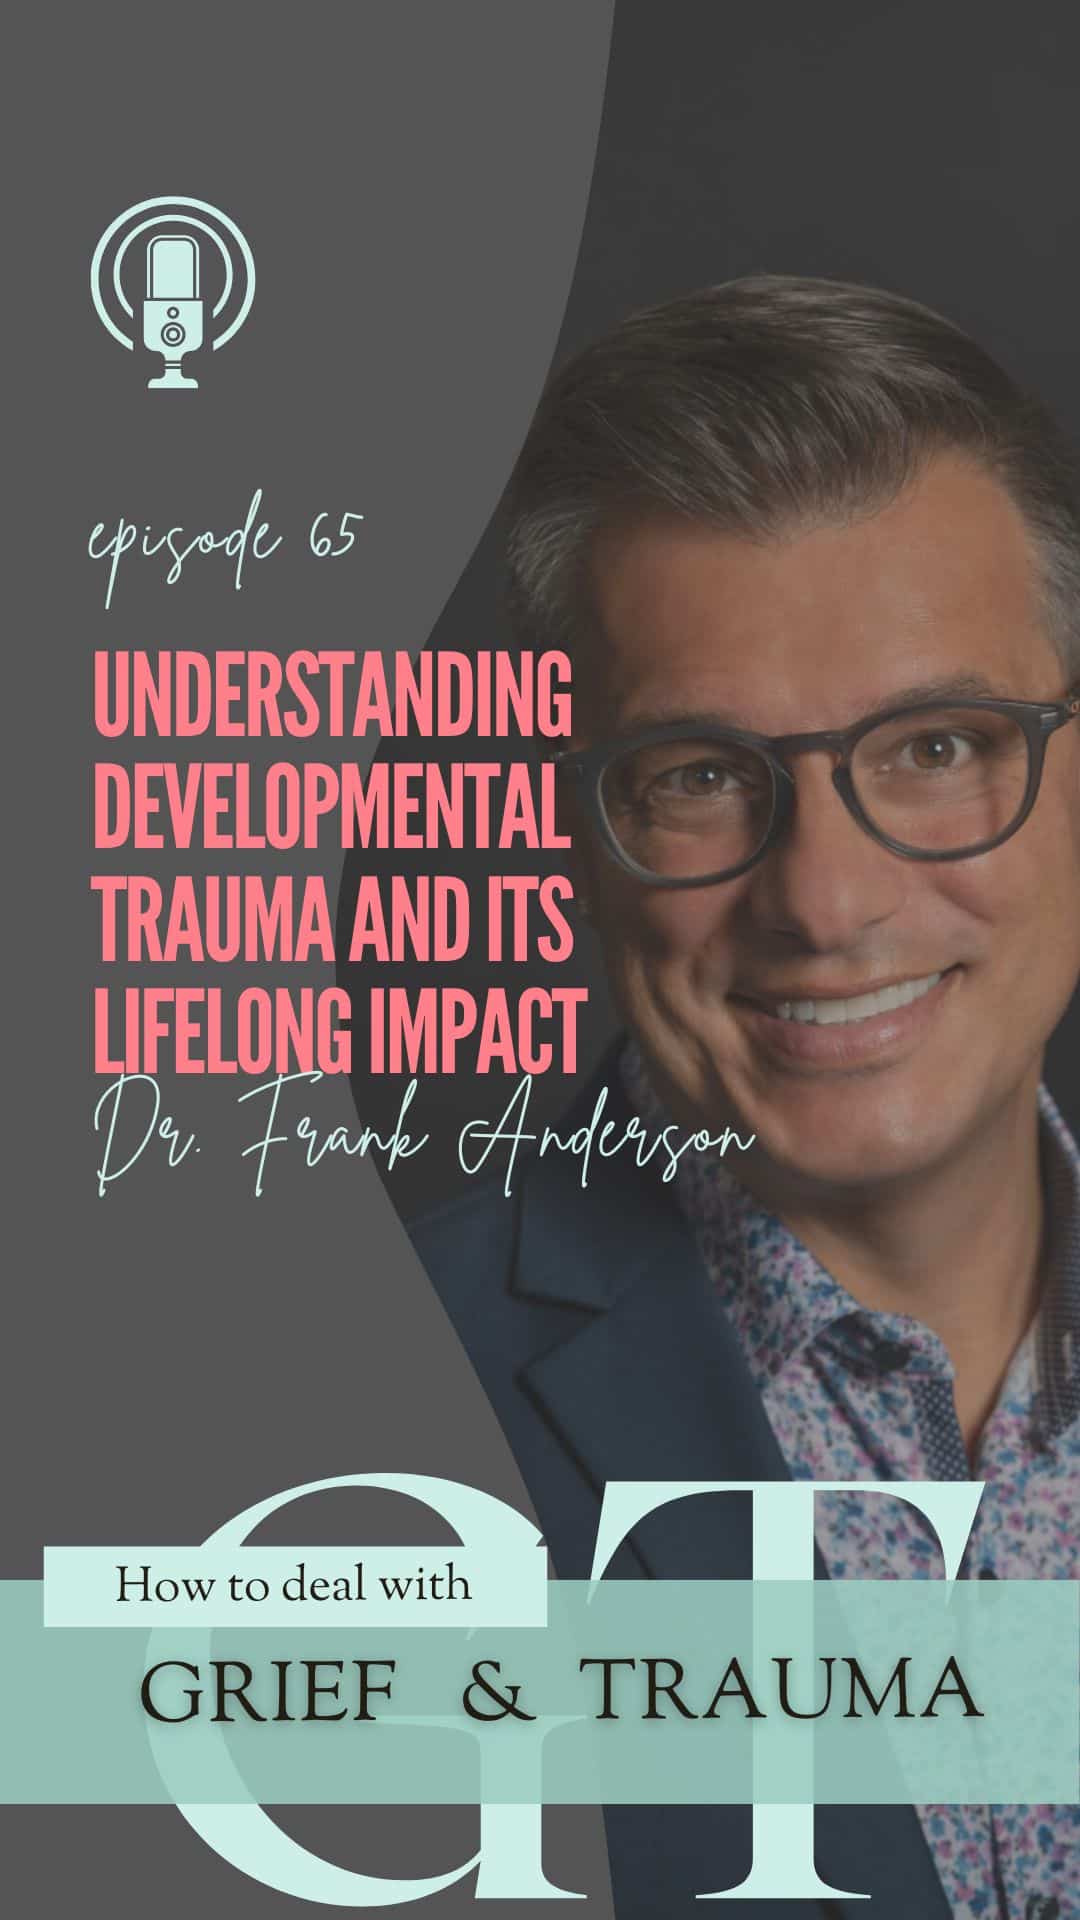 65 Dr. Frank Anderson | Understanding Developmental Trauma and Its Lifelong Impact